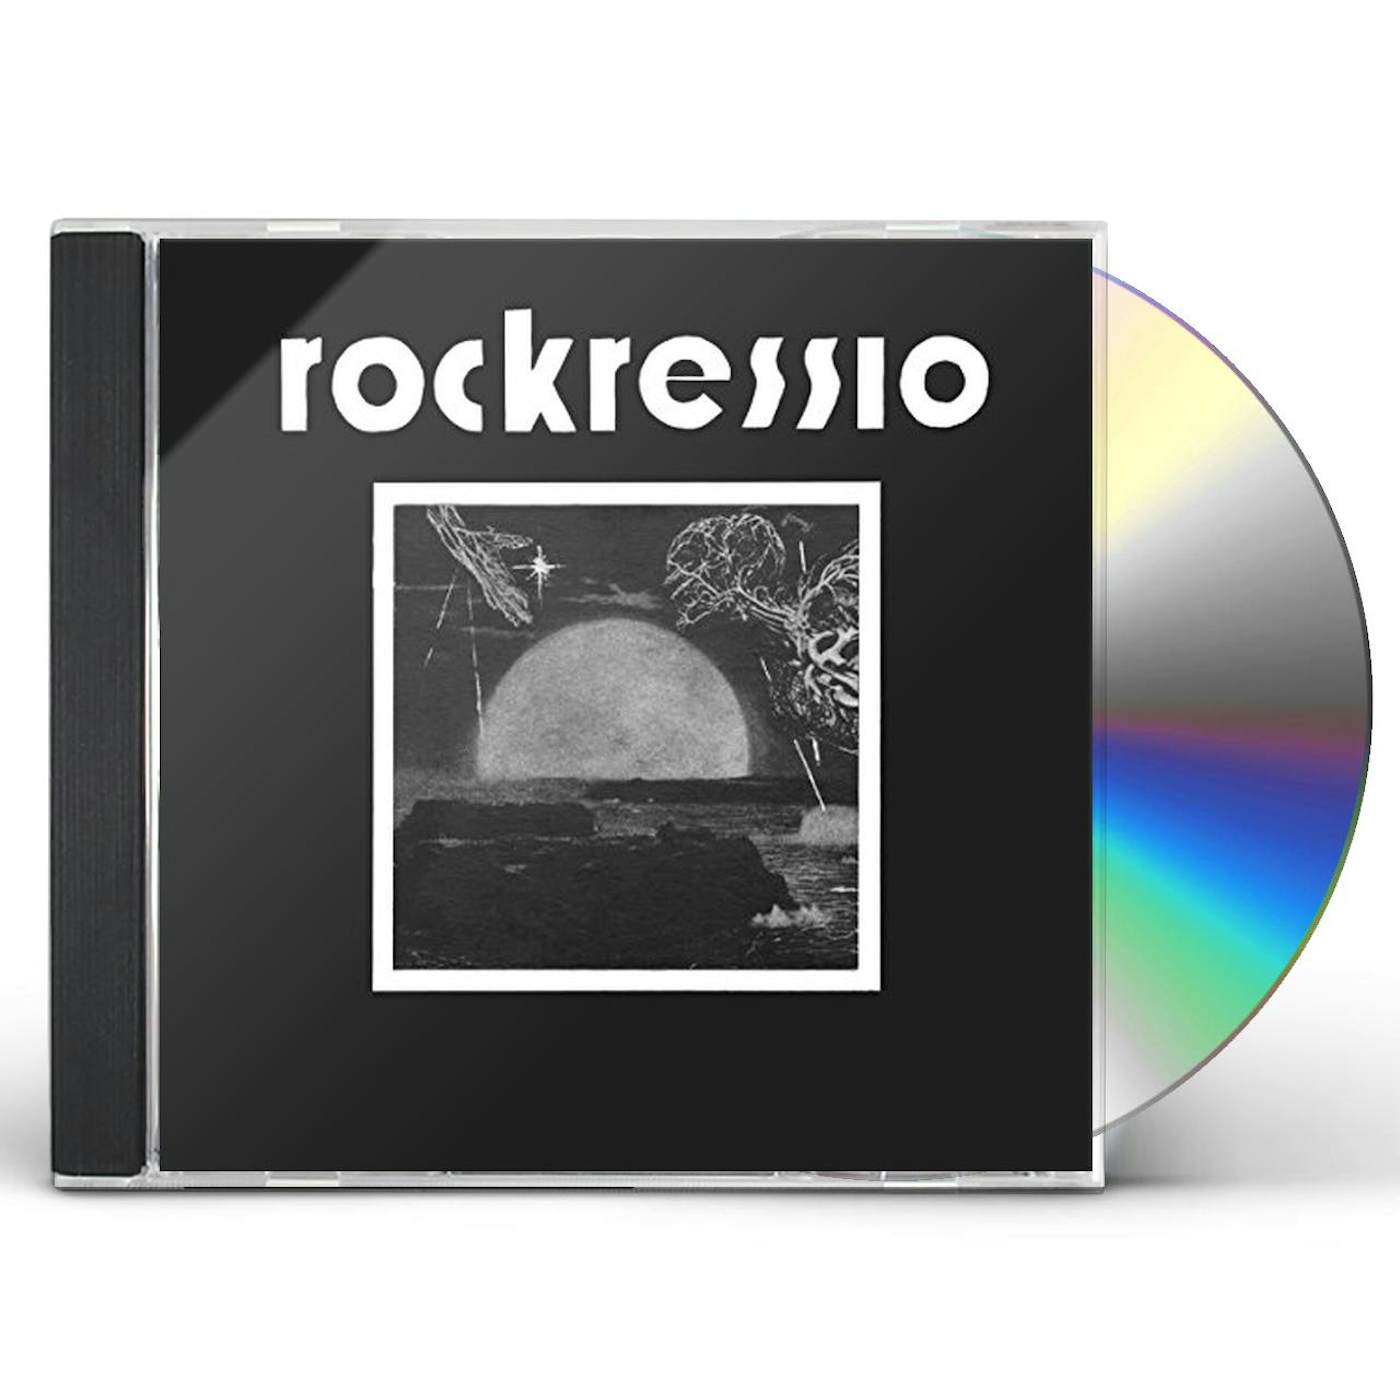 Rockressio COMPLETE CD